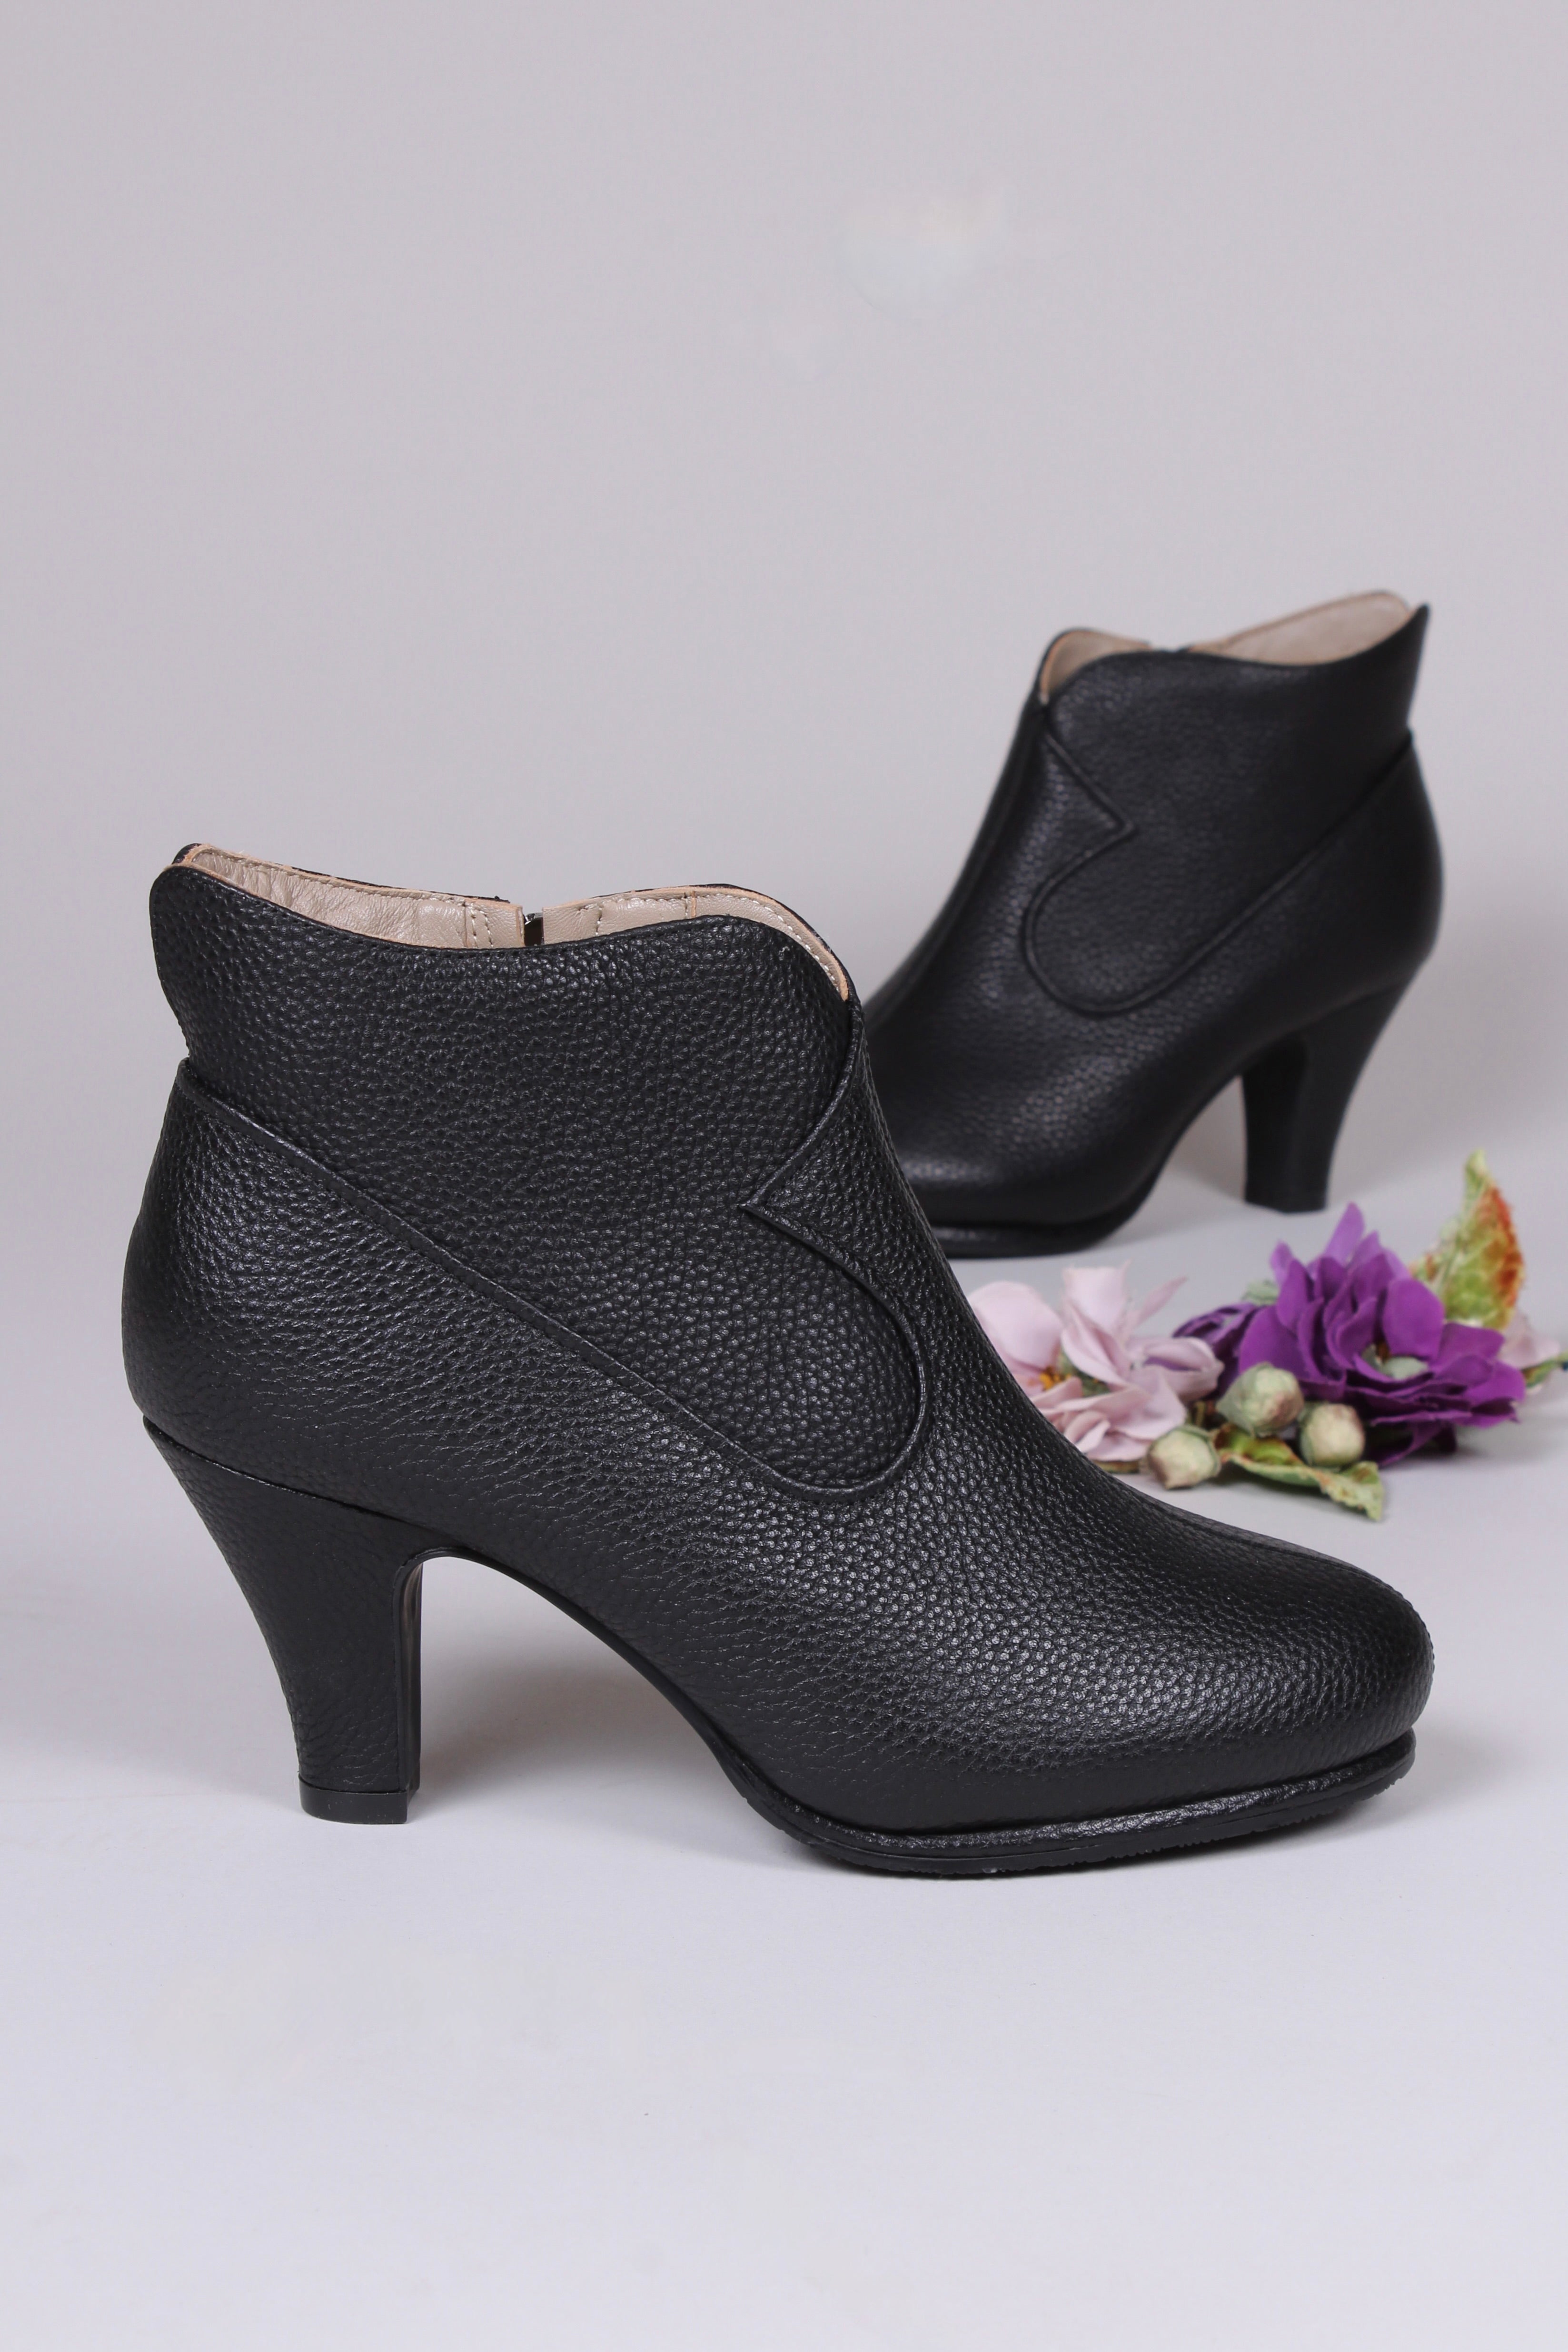 Black Patent Platform Block Heel Ankle Boots - CHARLES & KEITH UK